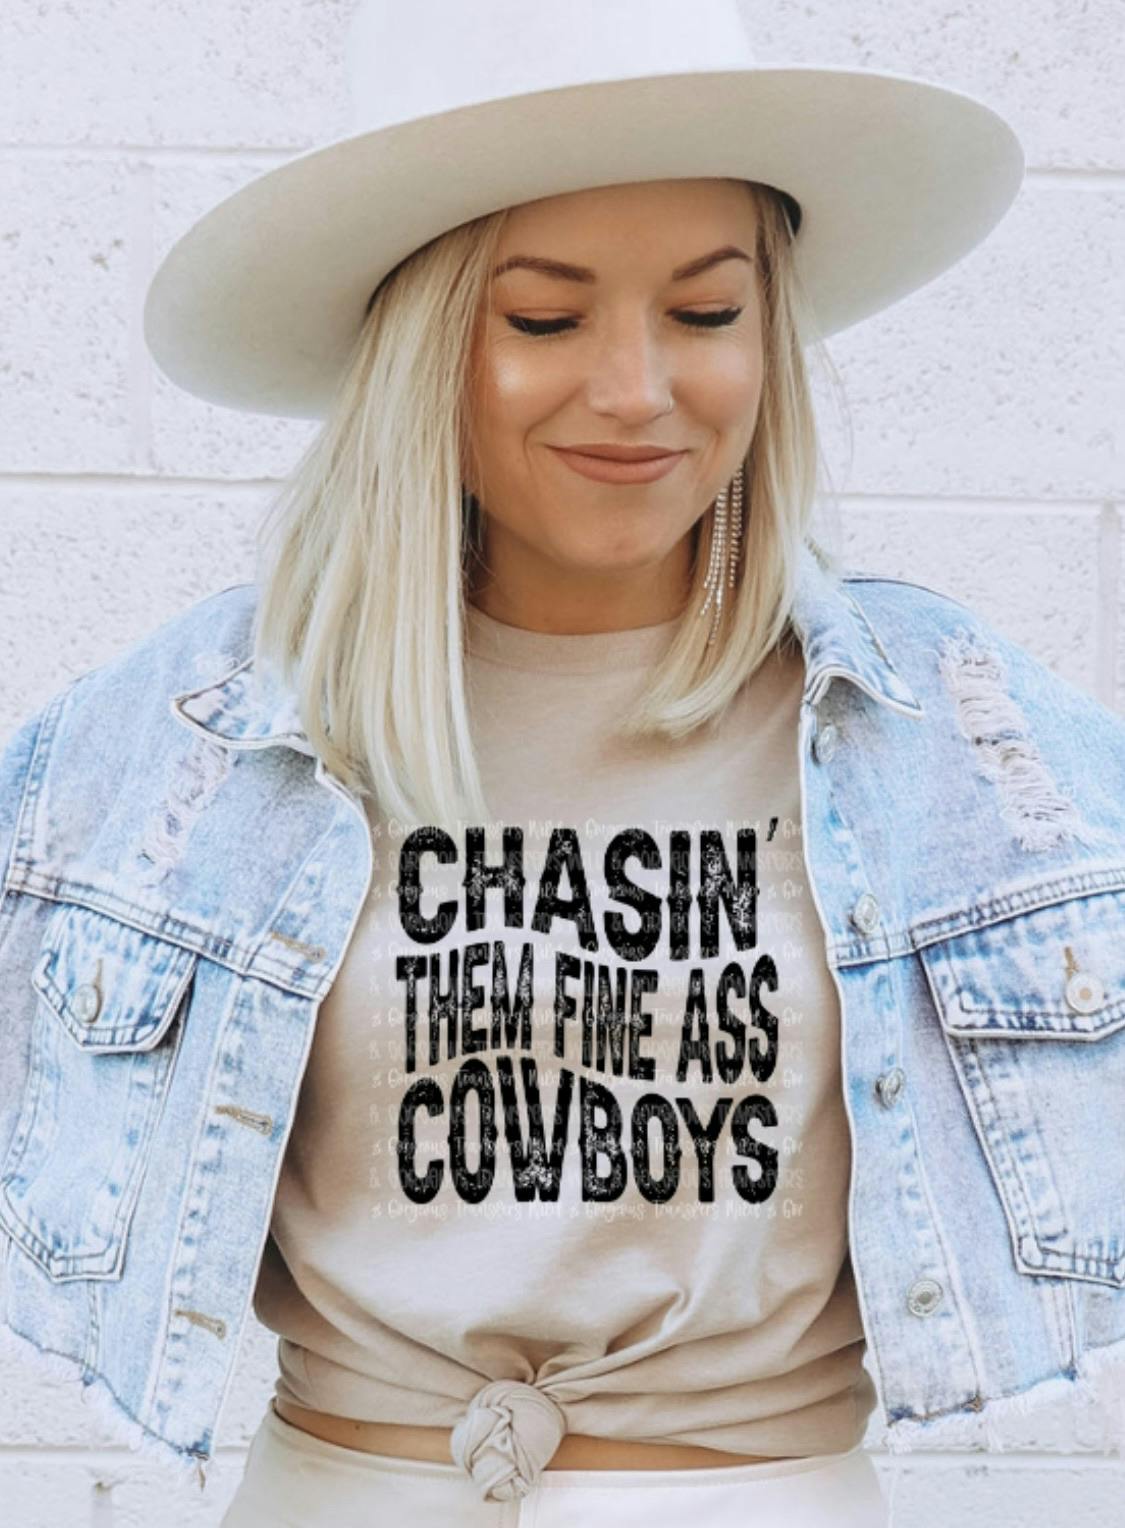 The Fine Ass Cowboys 